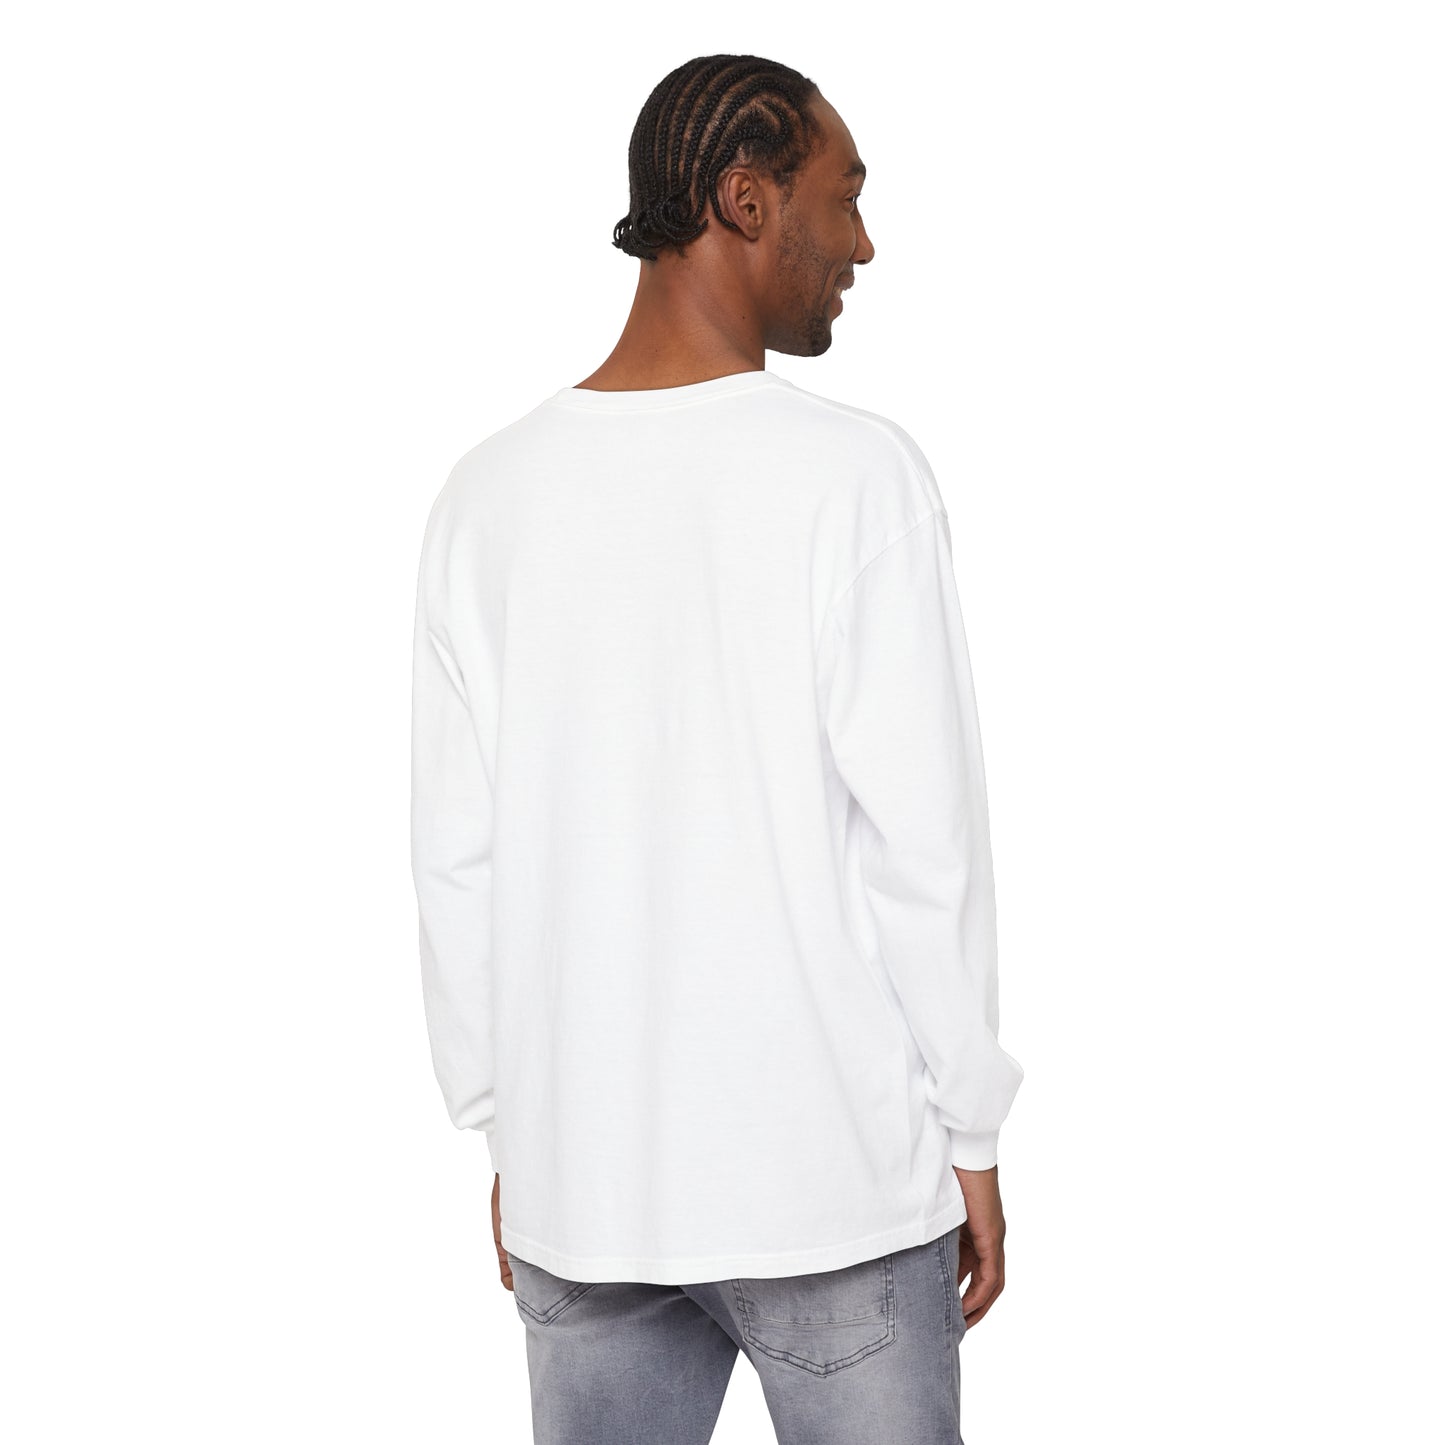 BN2U Unisex Garment-dyed Long Sleeve T-Shirt